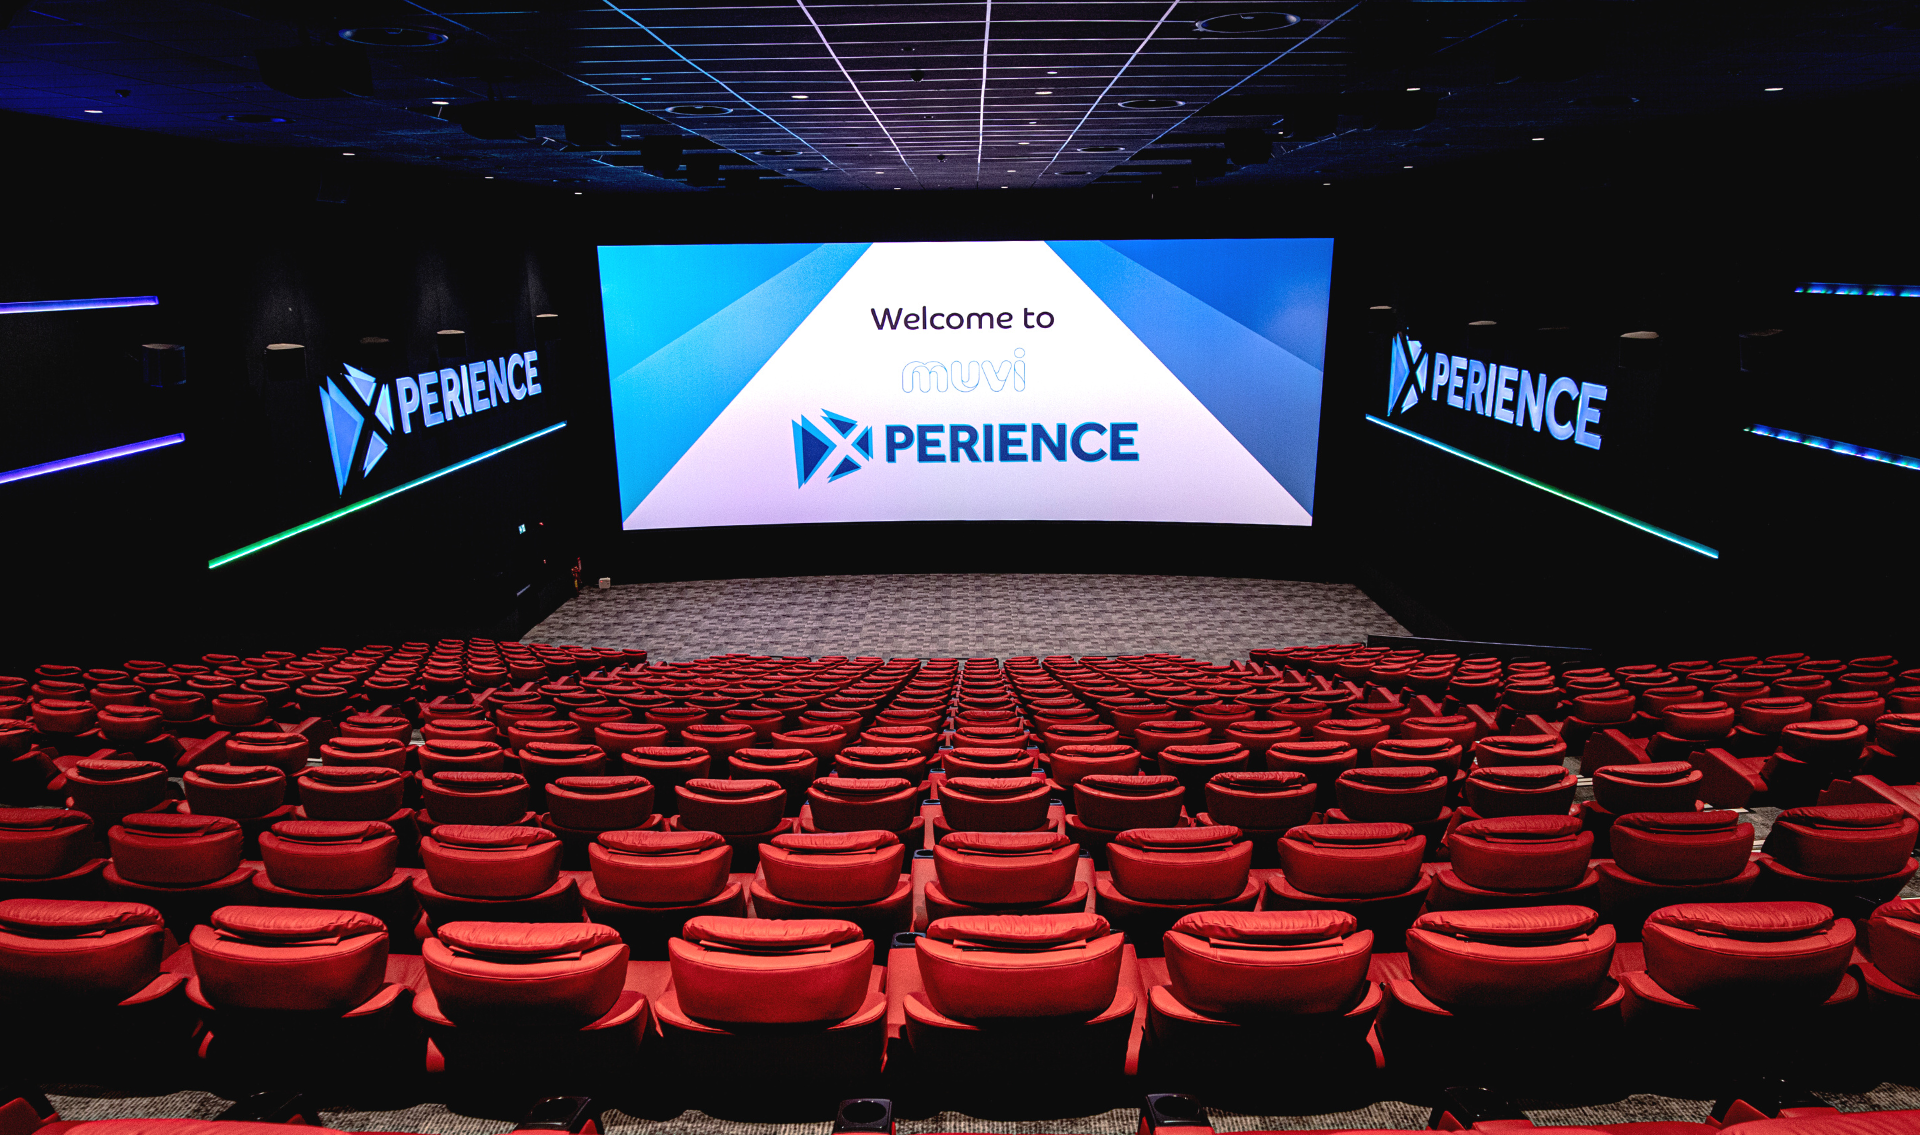 Largest cinema screen